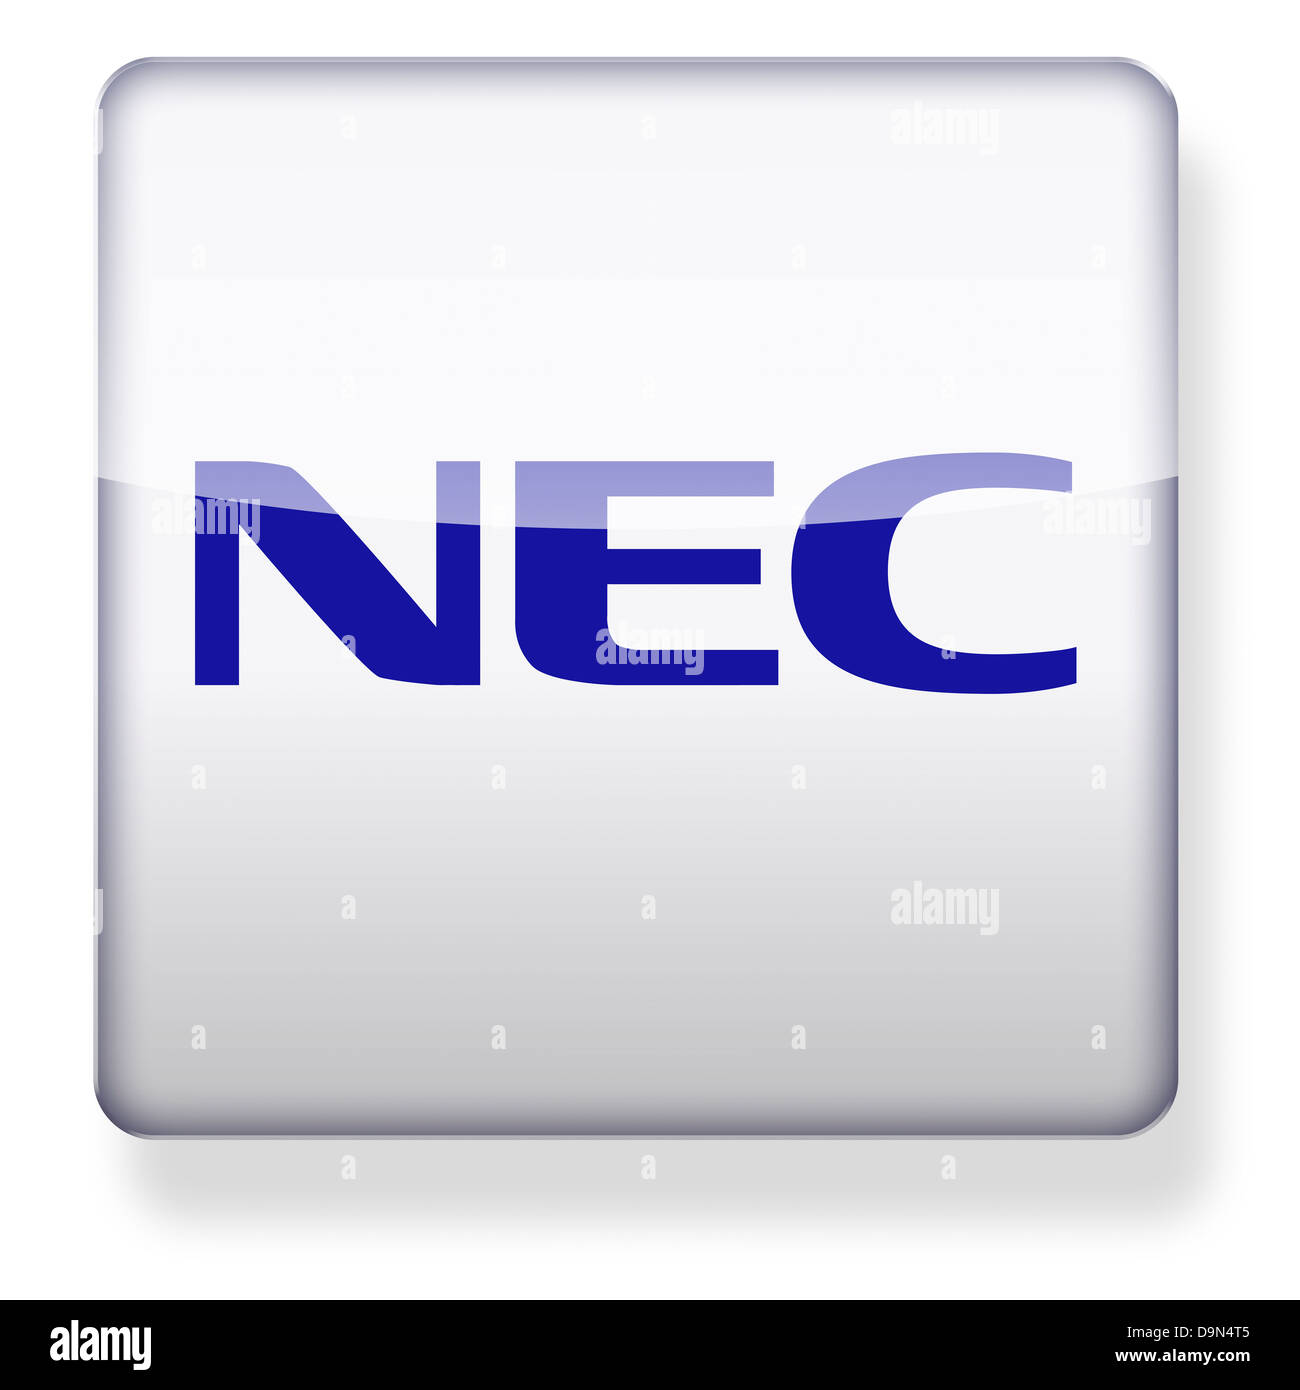 46 Nec Corporation Images Stock Photos  Vectors  Shutterstock